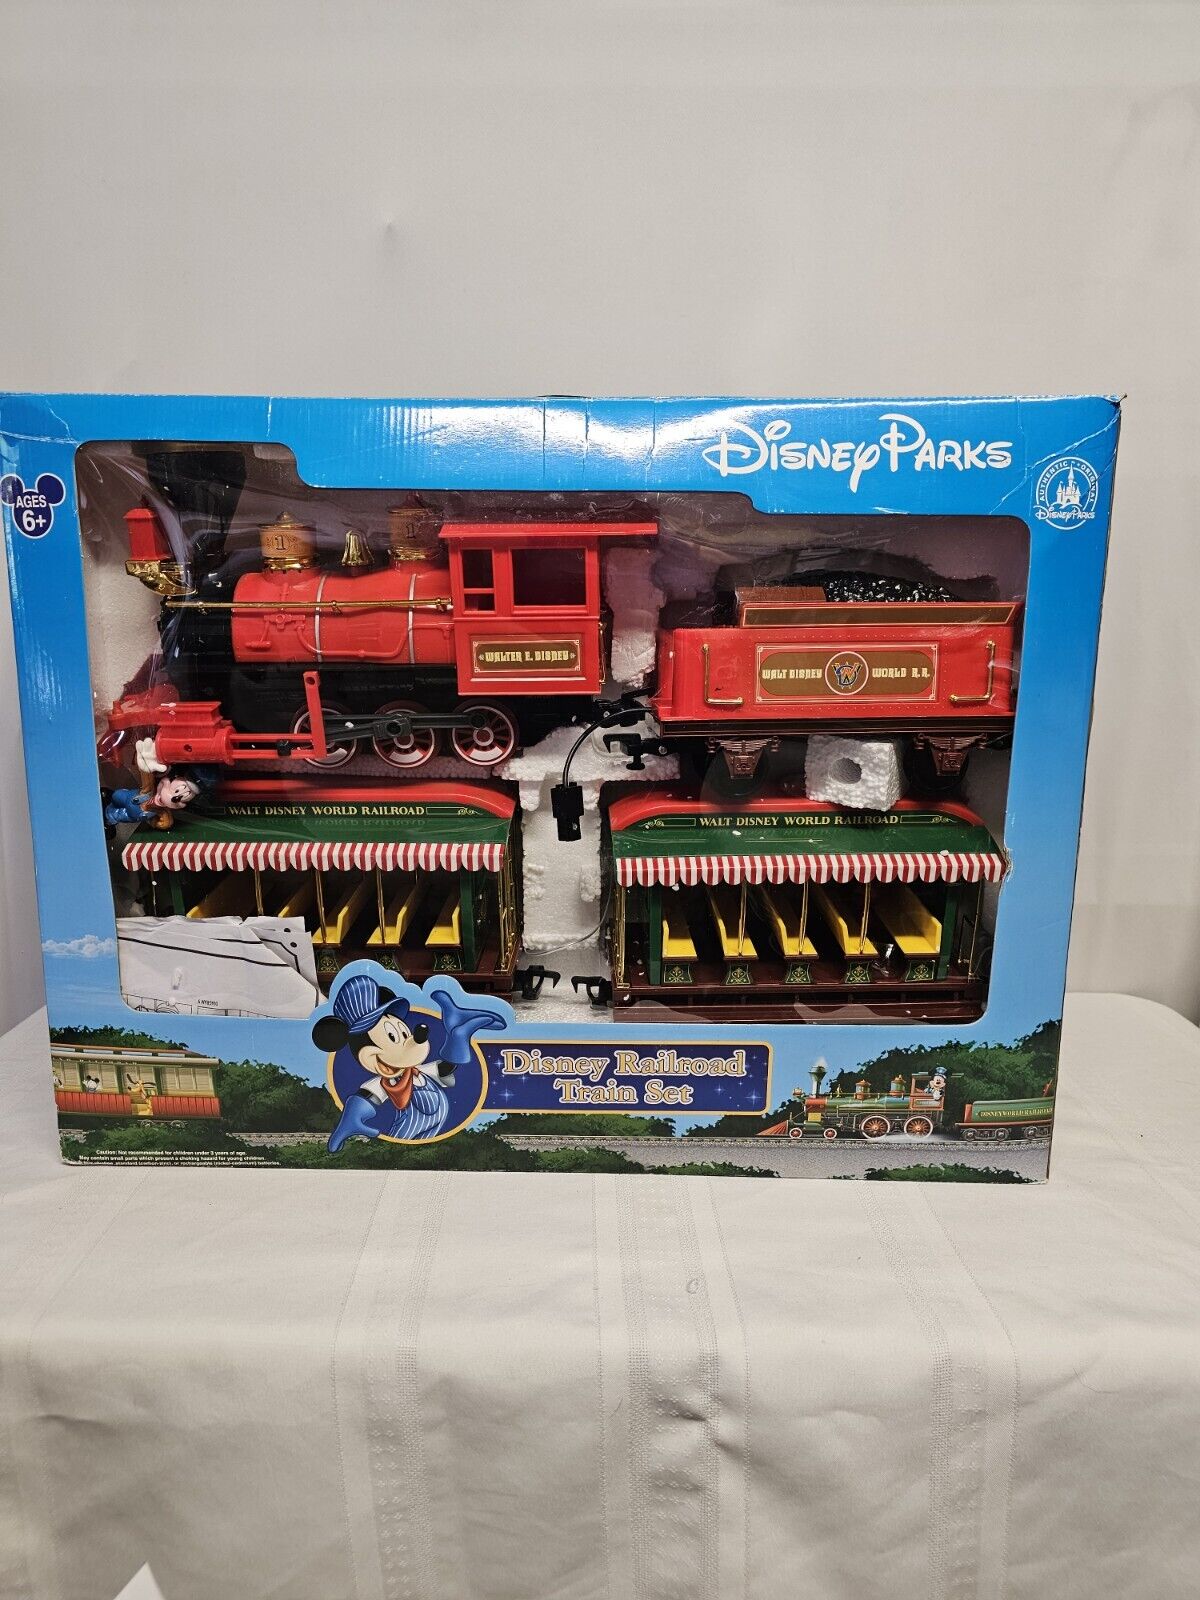 Walt Disney World Disney Railroad Train Set Building Toy Set - Brand New In Box